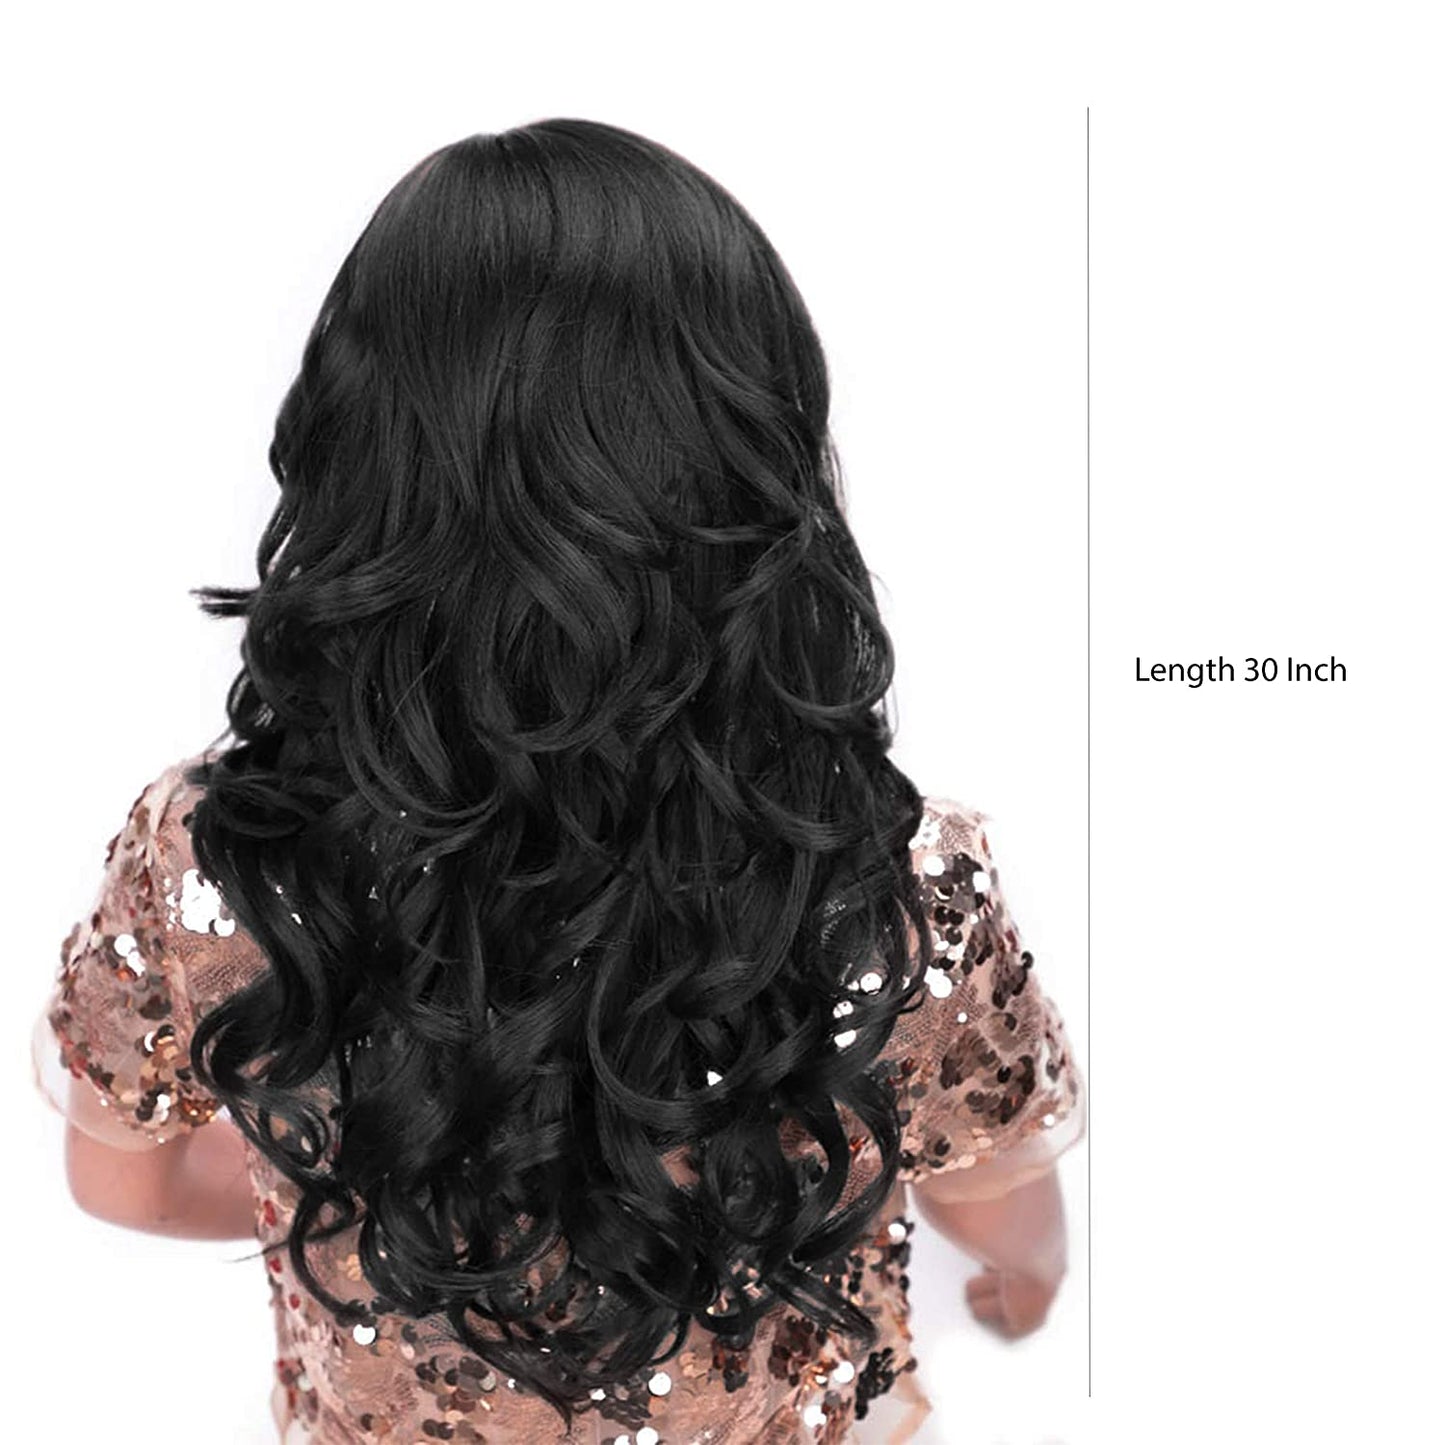 Lush Locks  Full Head Synthetic Women Wigs Long Hair For Women/Women Wigs Natural Hair (Curly Black)